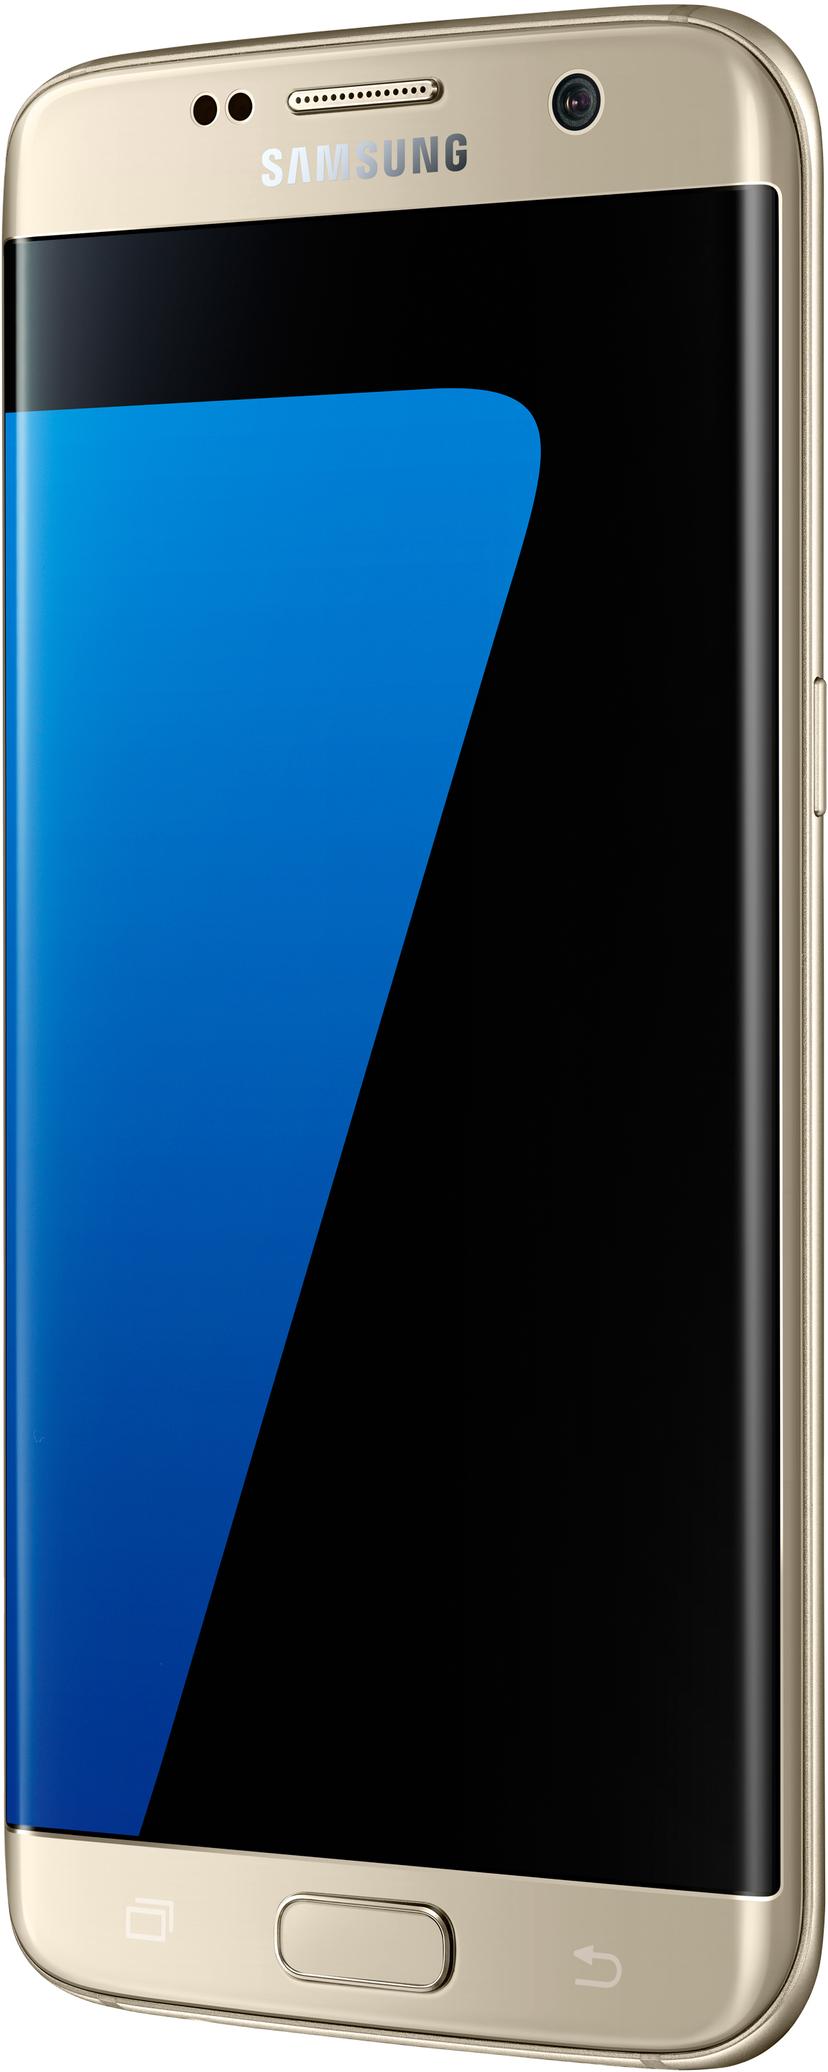 Samsung Galaxy S7 Edge 32GB Guld platinium